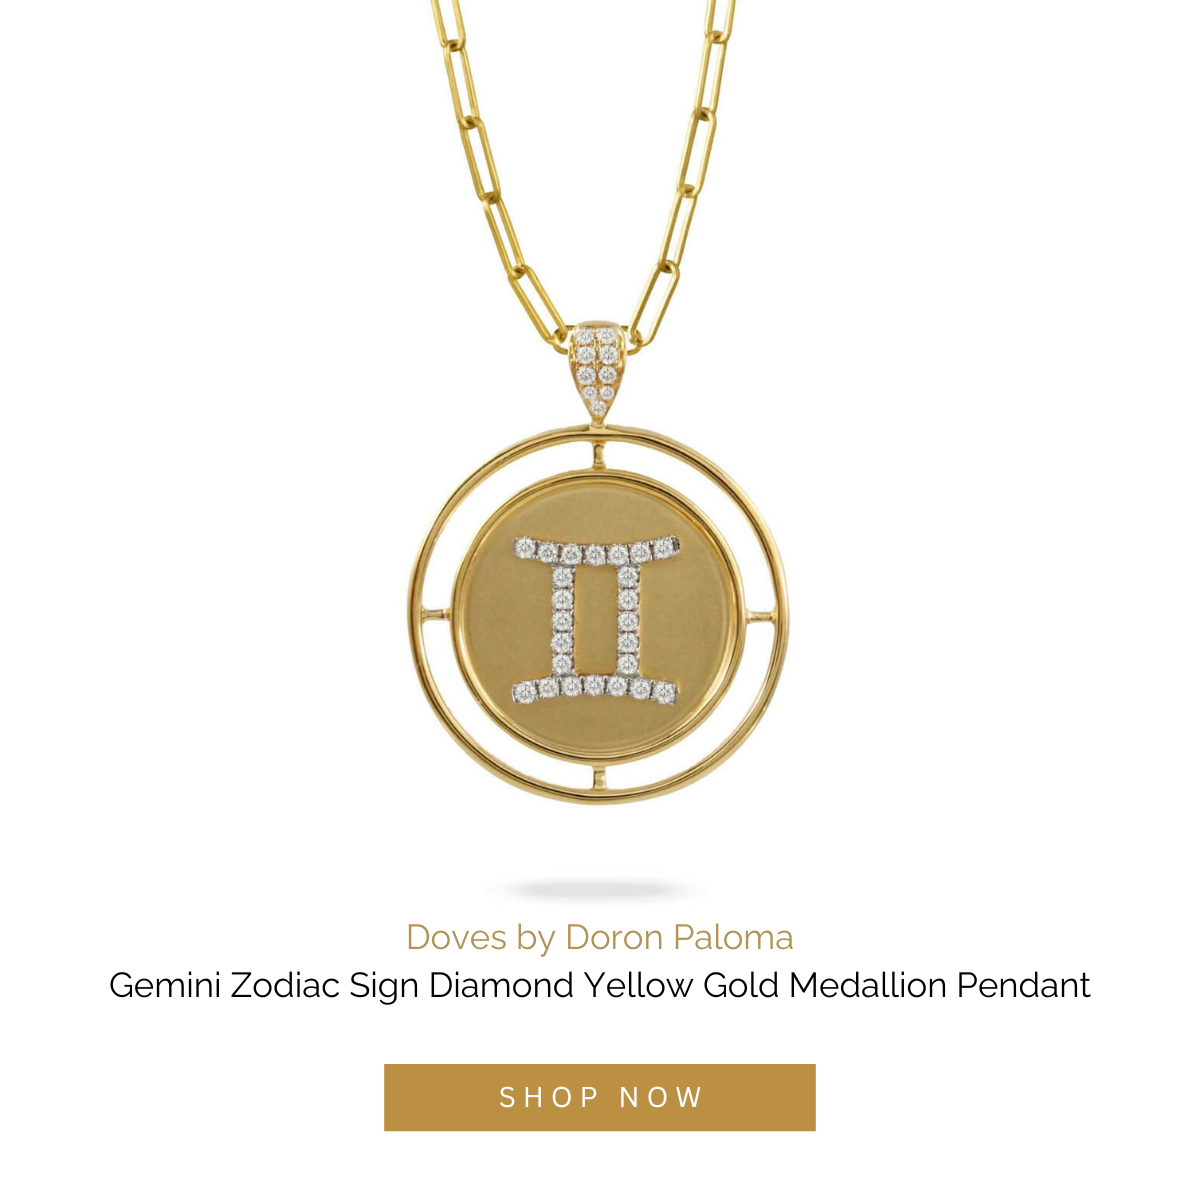 Doves by Doron Paloma Gemini Zodiac Sign Diamond Yellow Gold Medallion Pendant